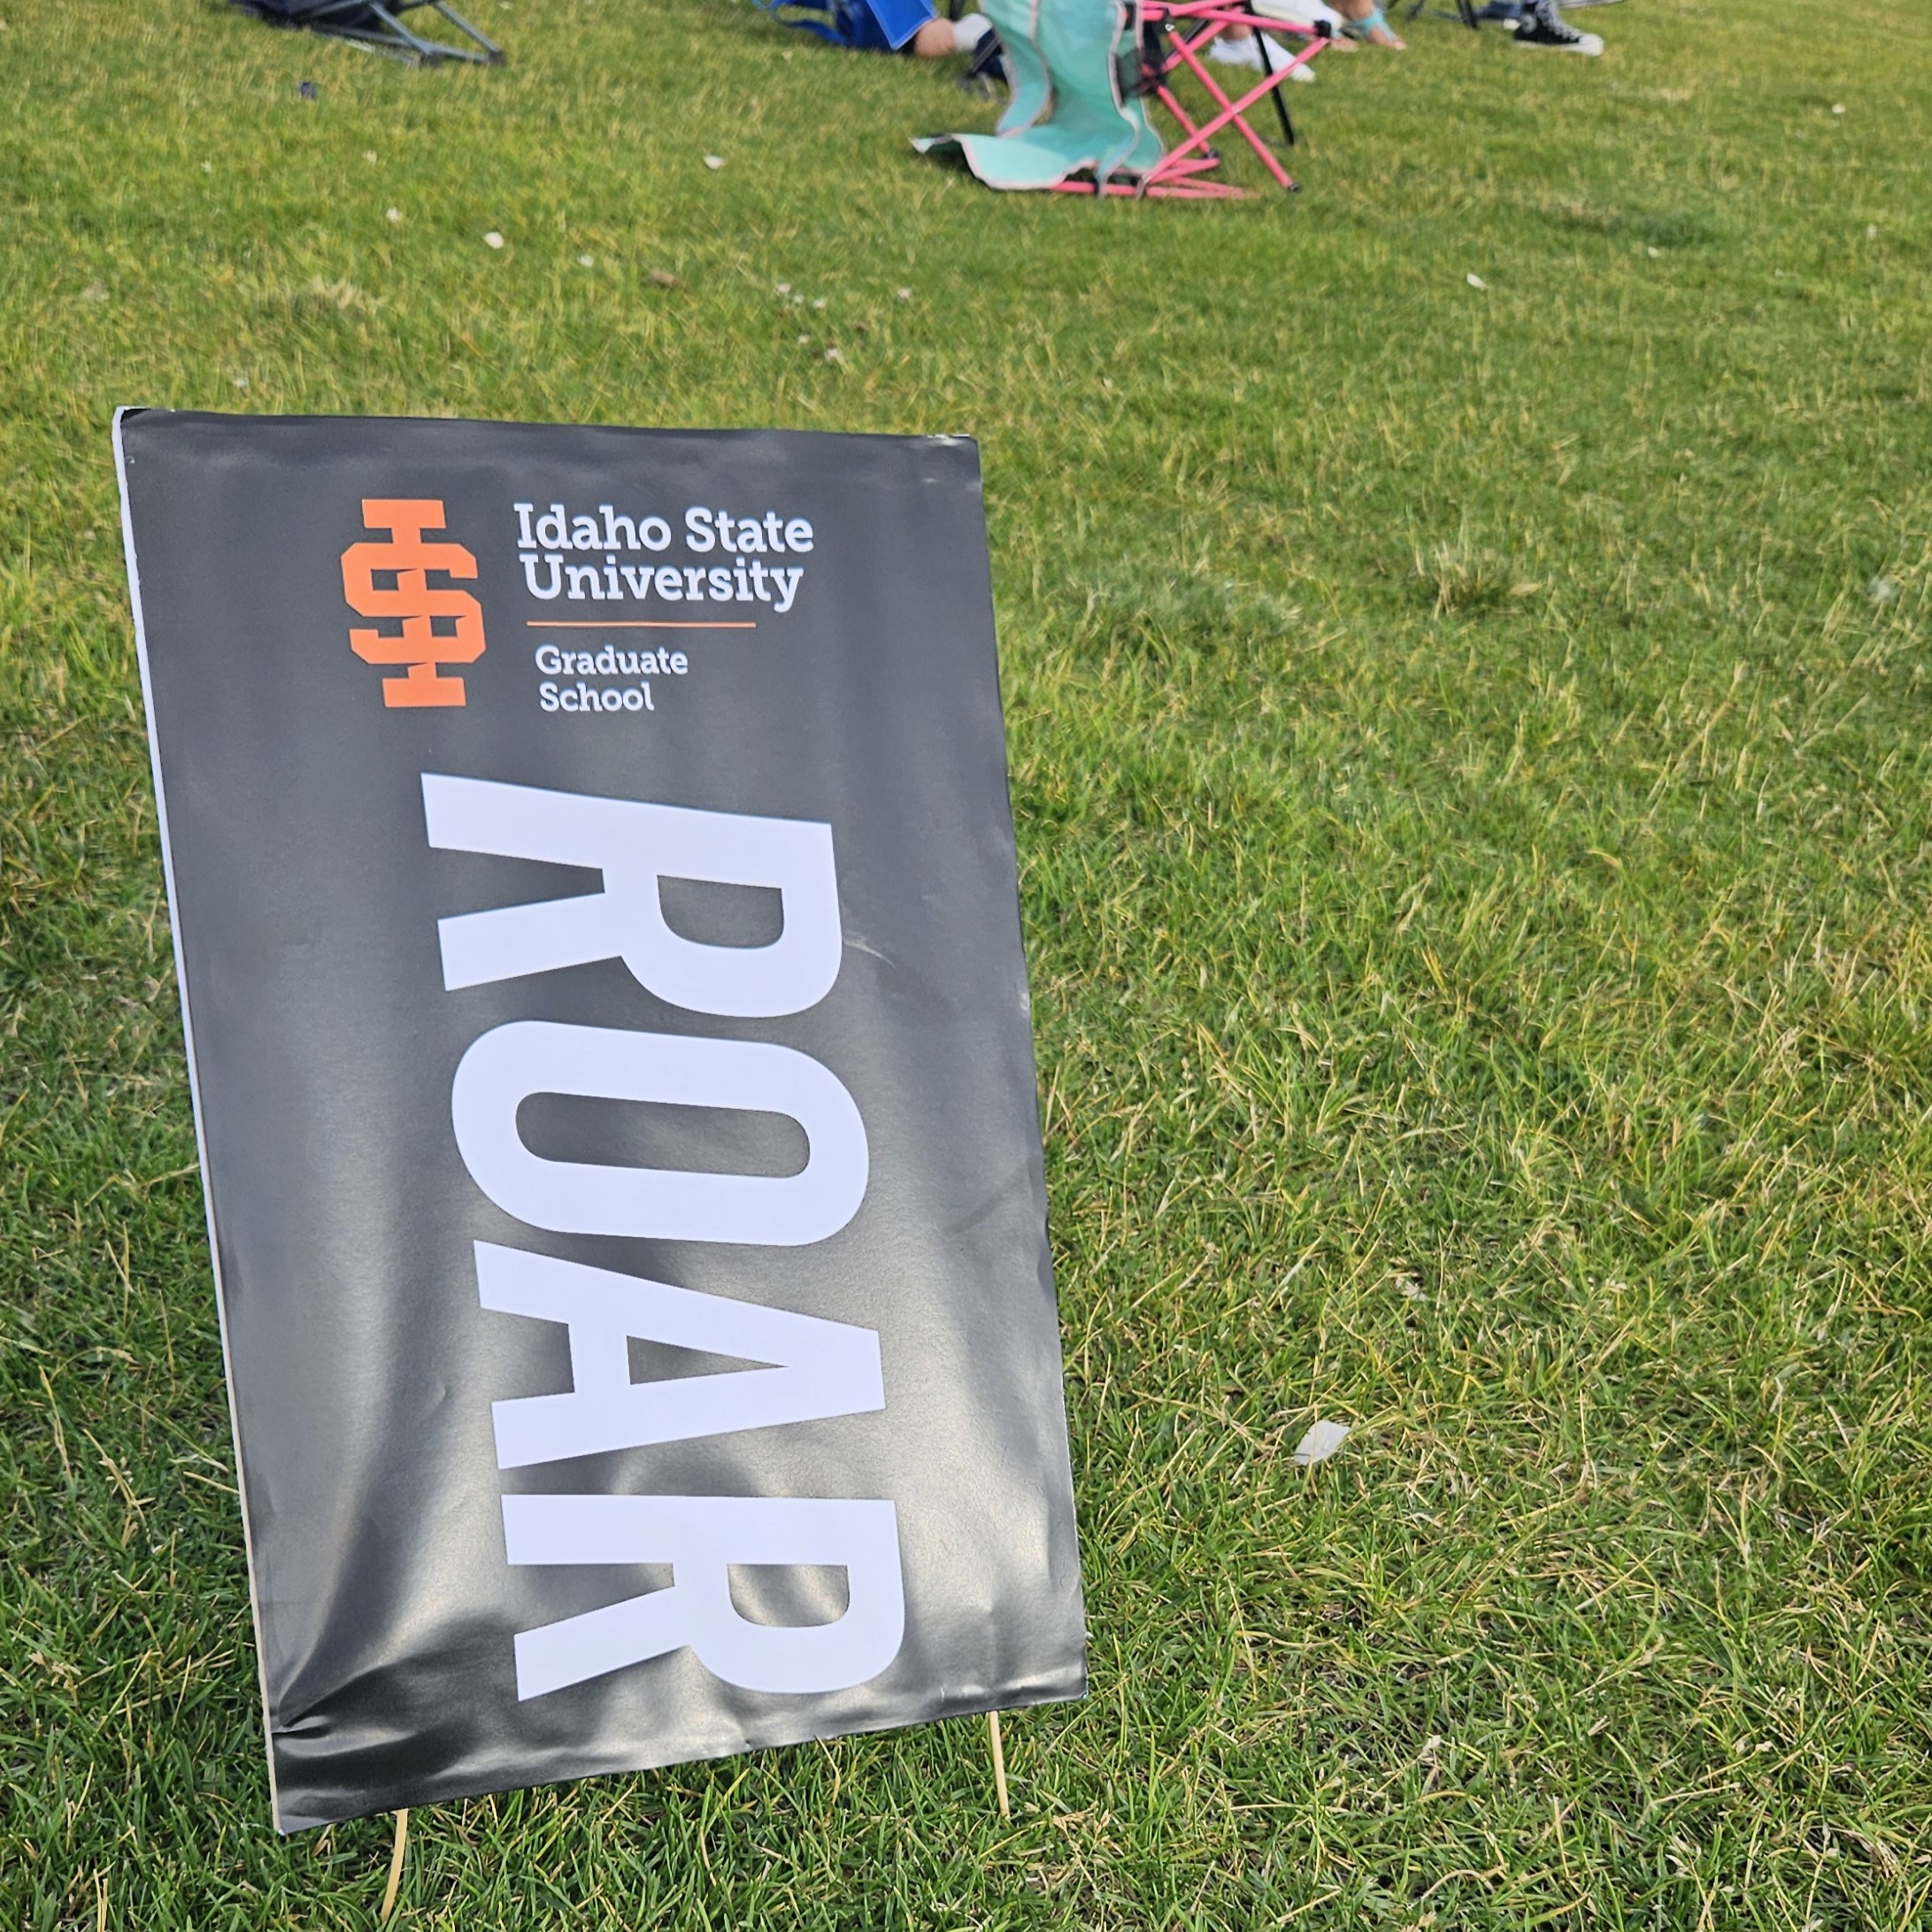 The graduate school ROAR sign in the grass